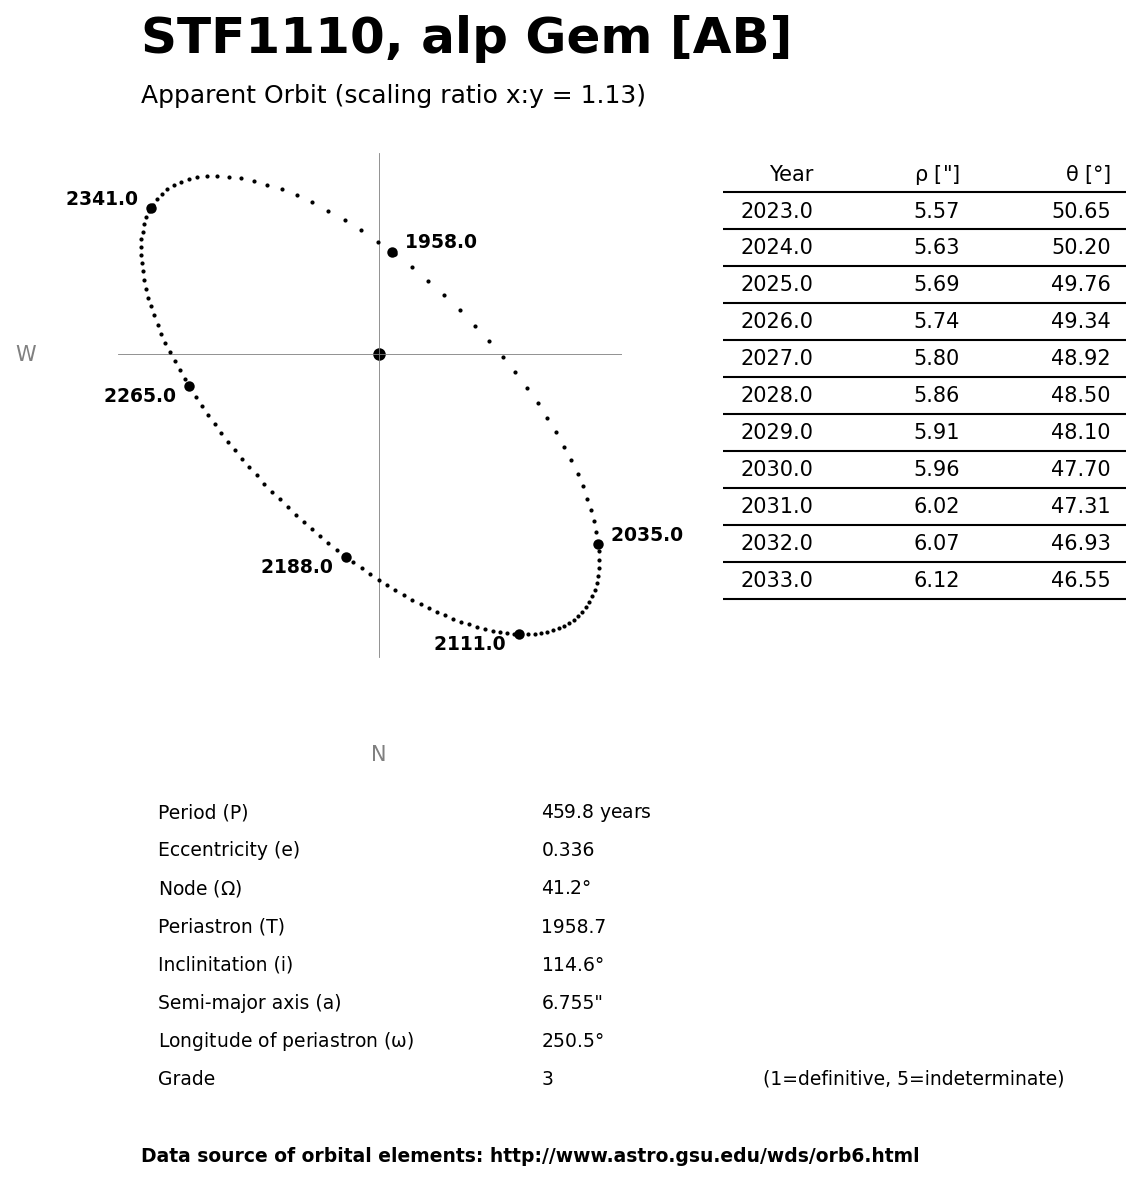 ../images/binary-star-orbits/STF1110-AB-orbit.jpg